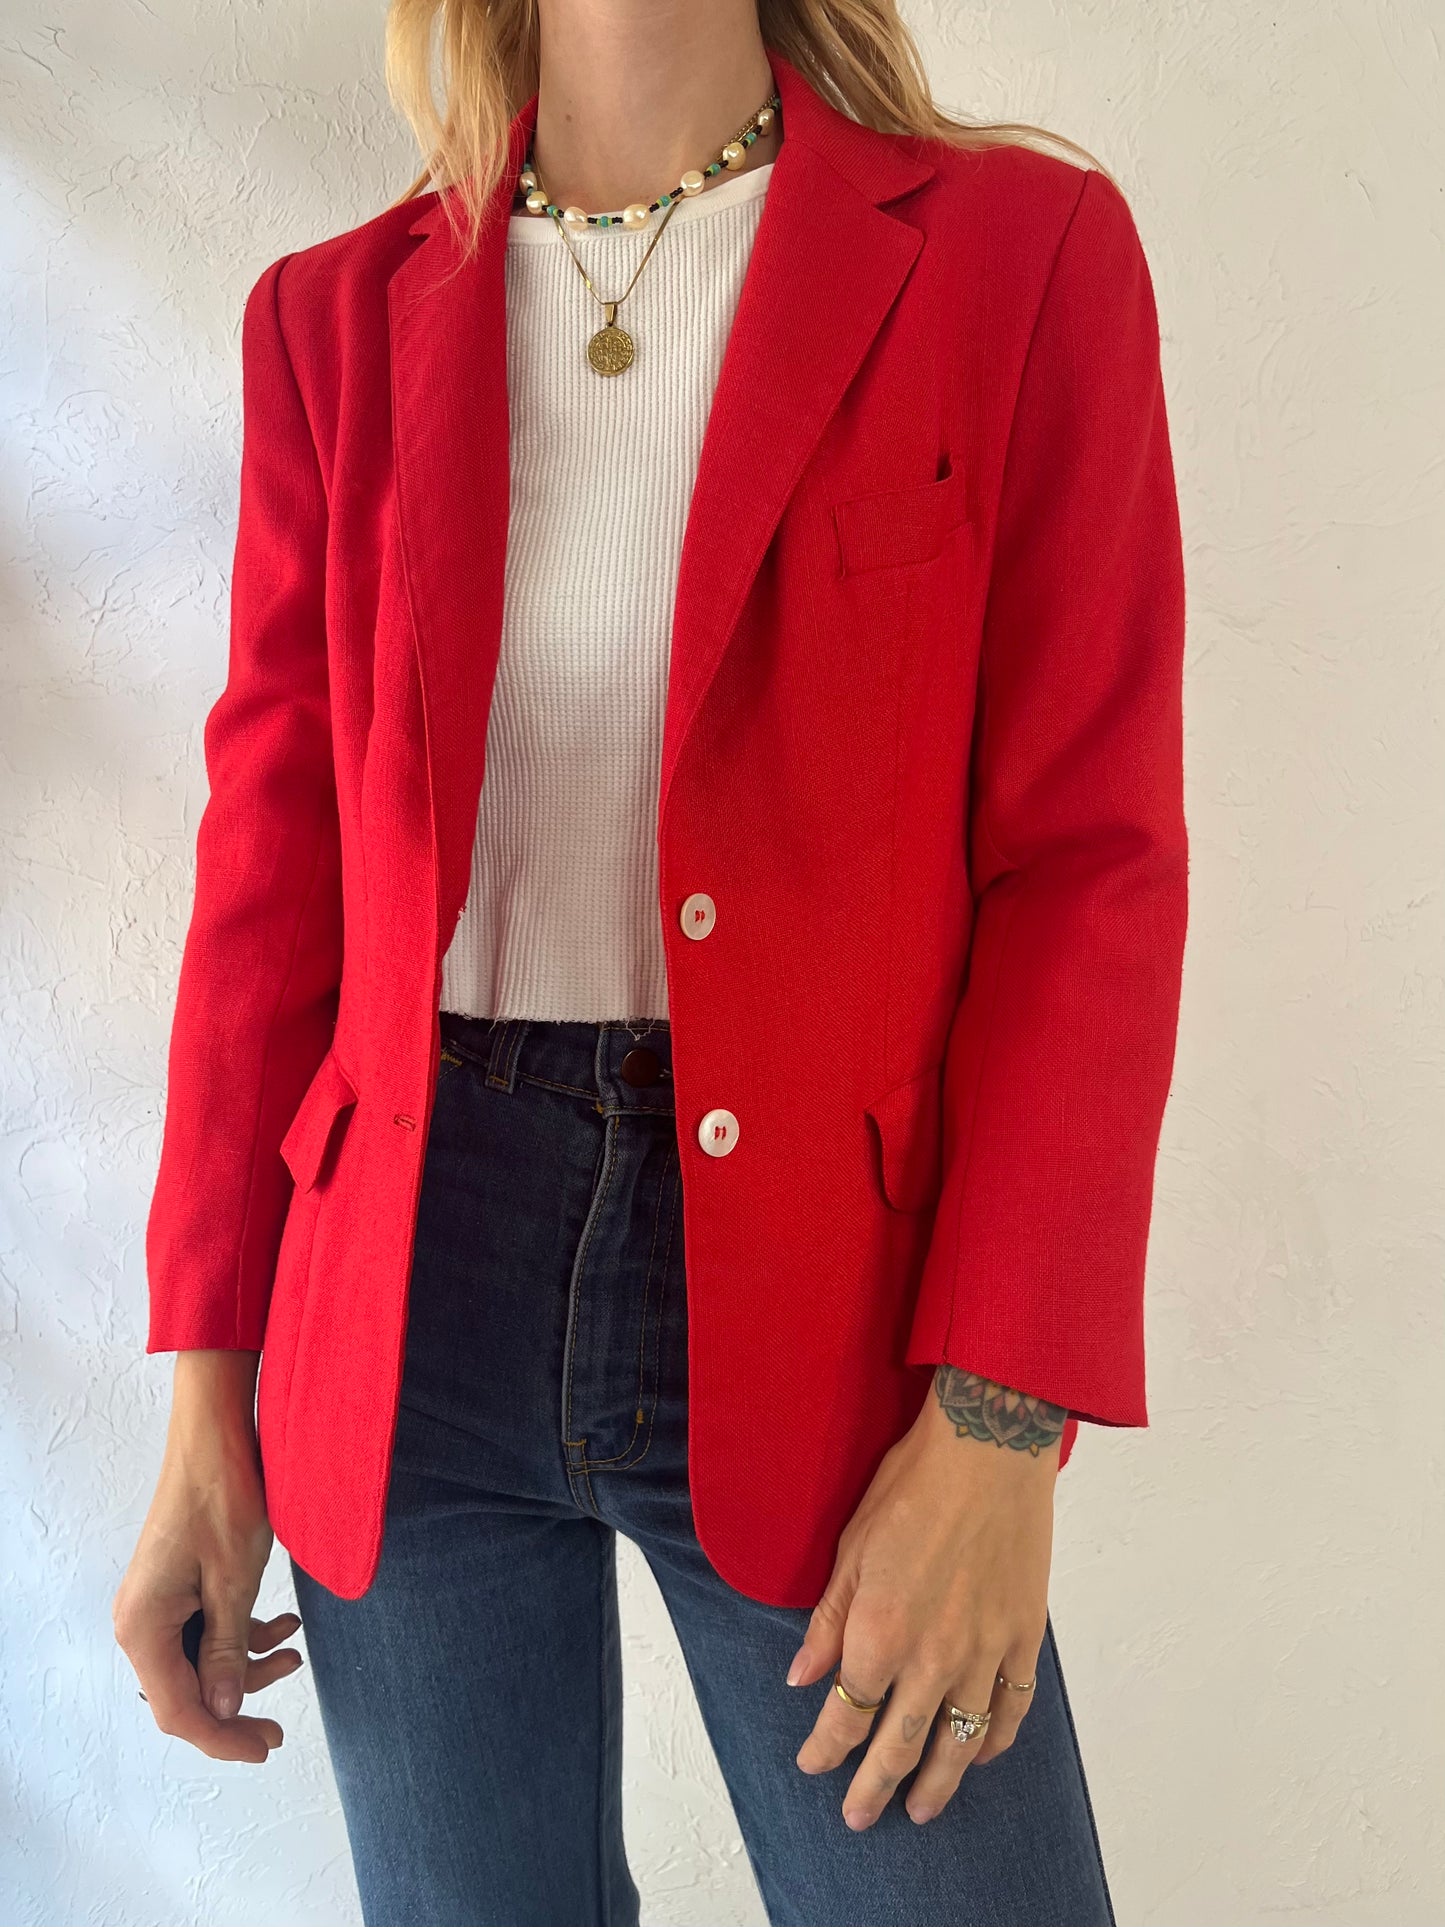 60s 70s 'Evan Picone' Red Blazer Jacket / Union Made / Small